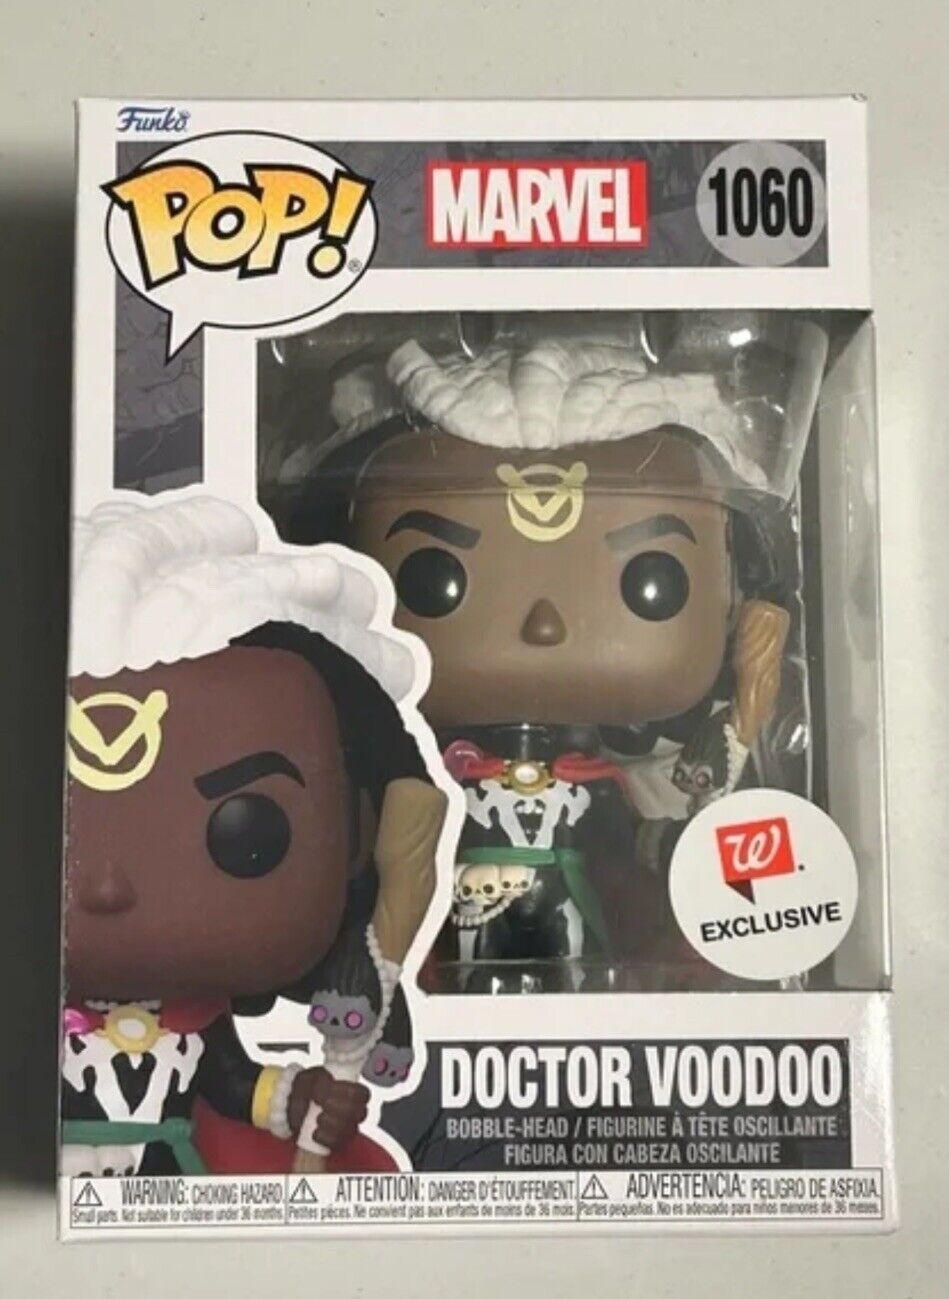 Funko Pop DOCTOR VOODOO #1060 Exclusive MARVEL Retired No Longer Avail In Store